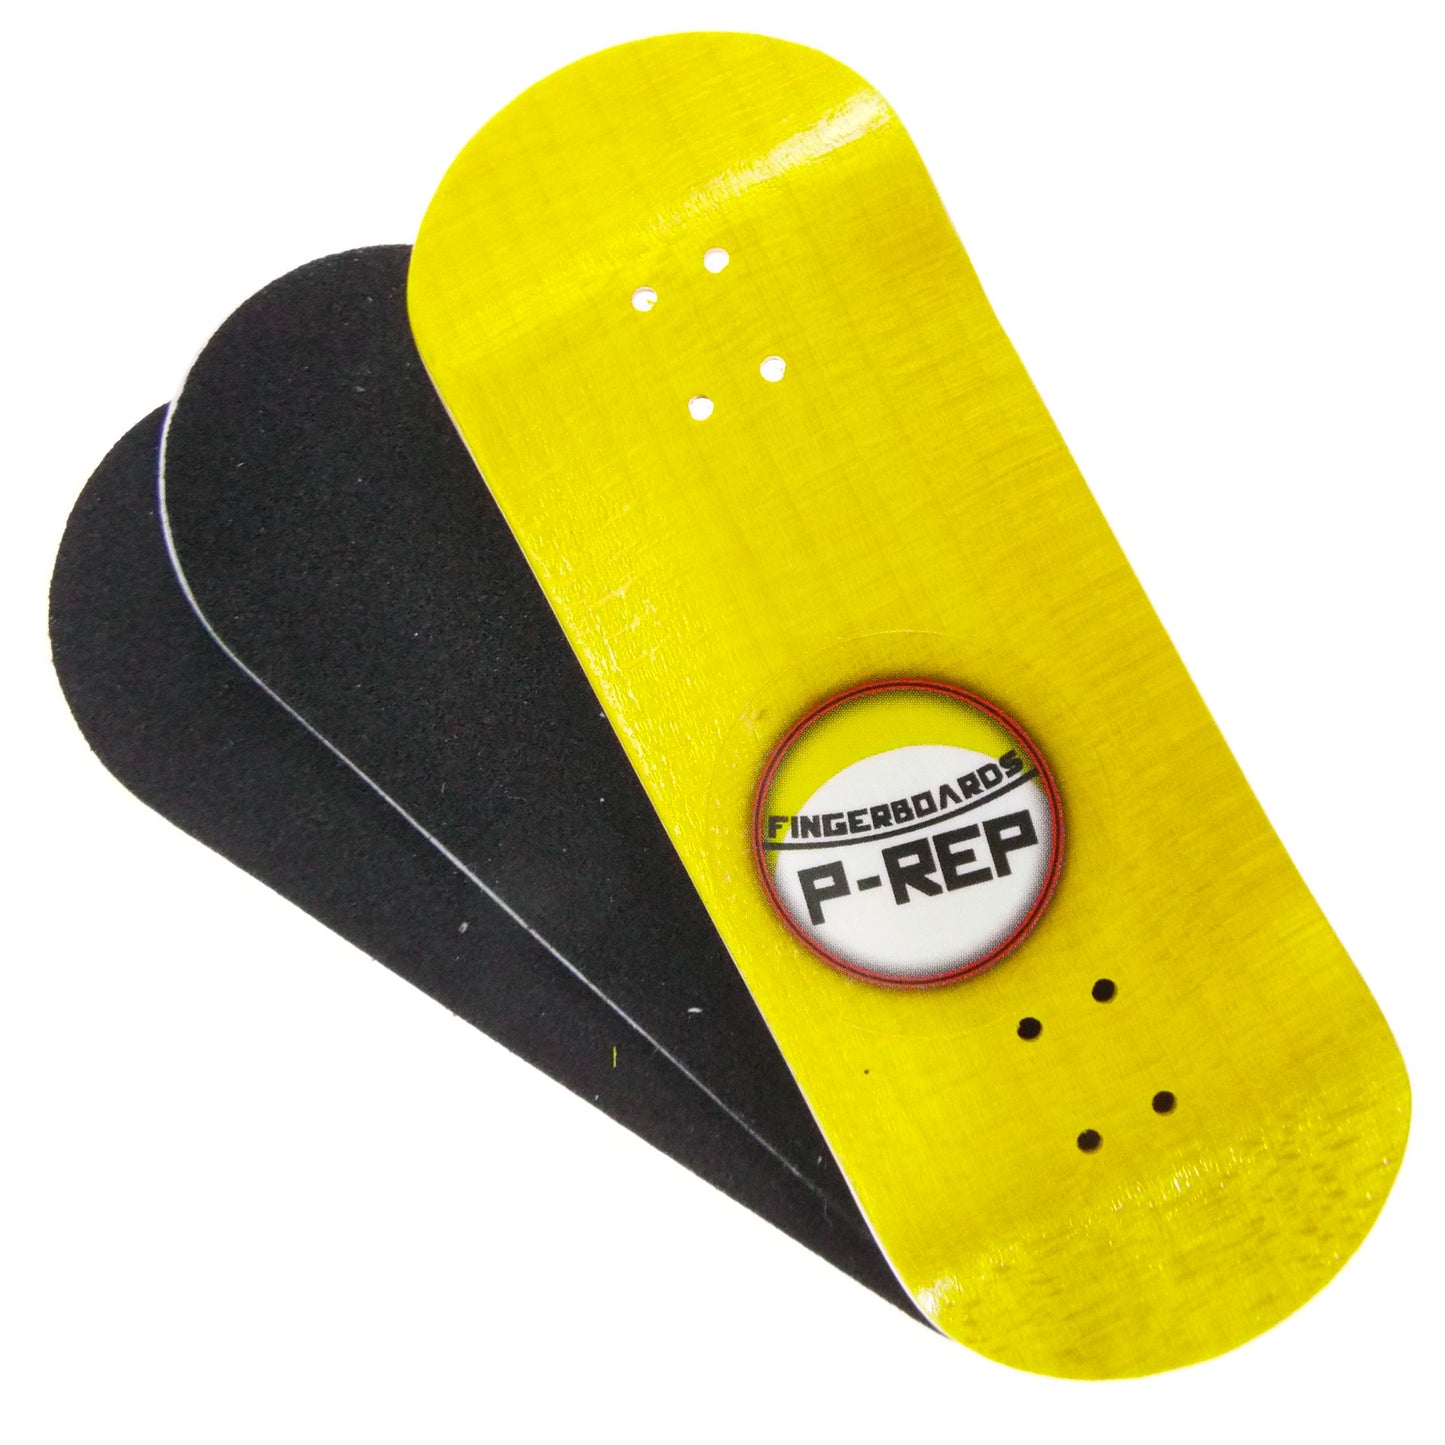 P-REP  34mm x 97mm Natural Deck - Yellow